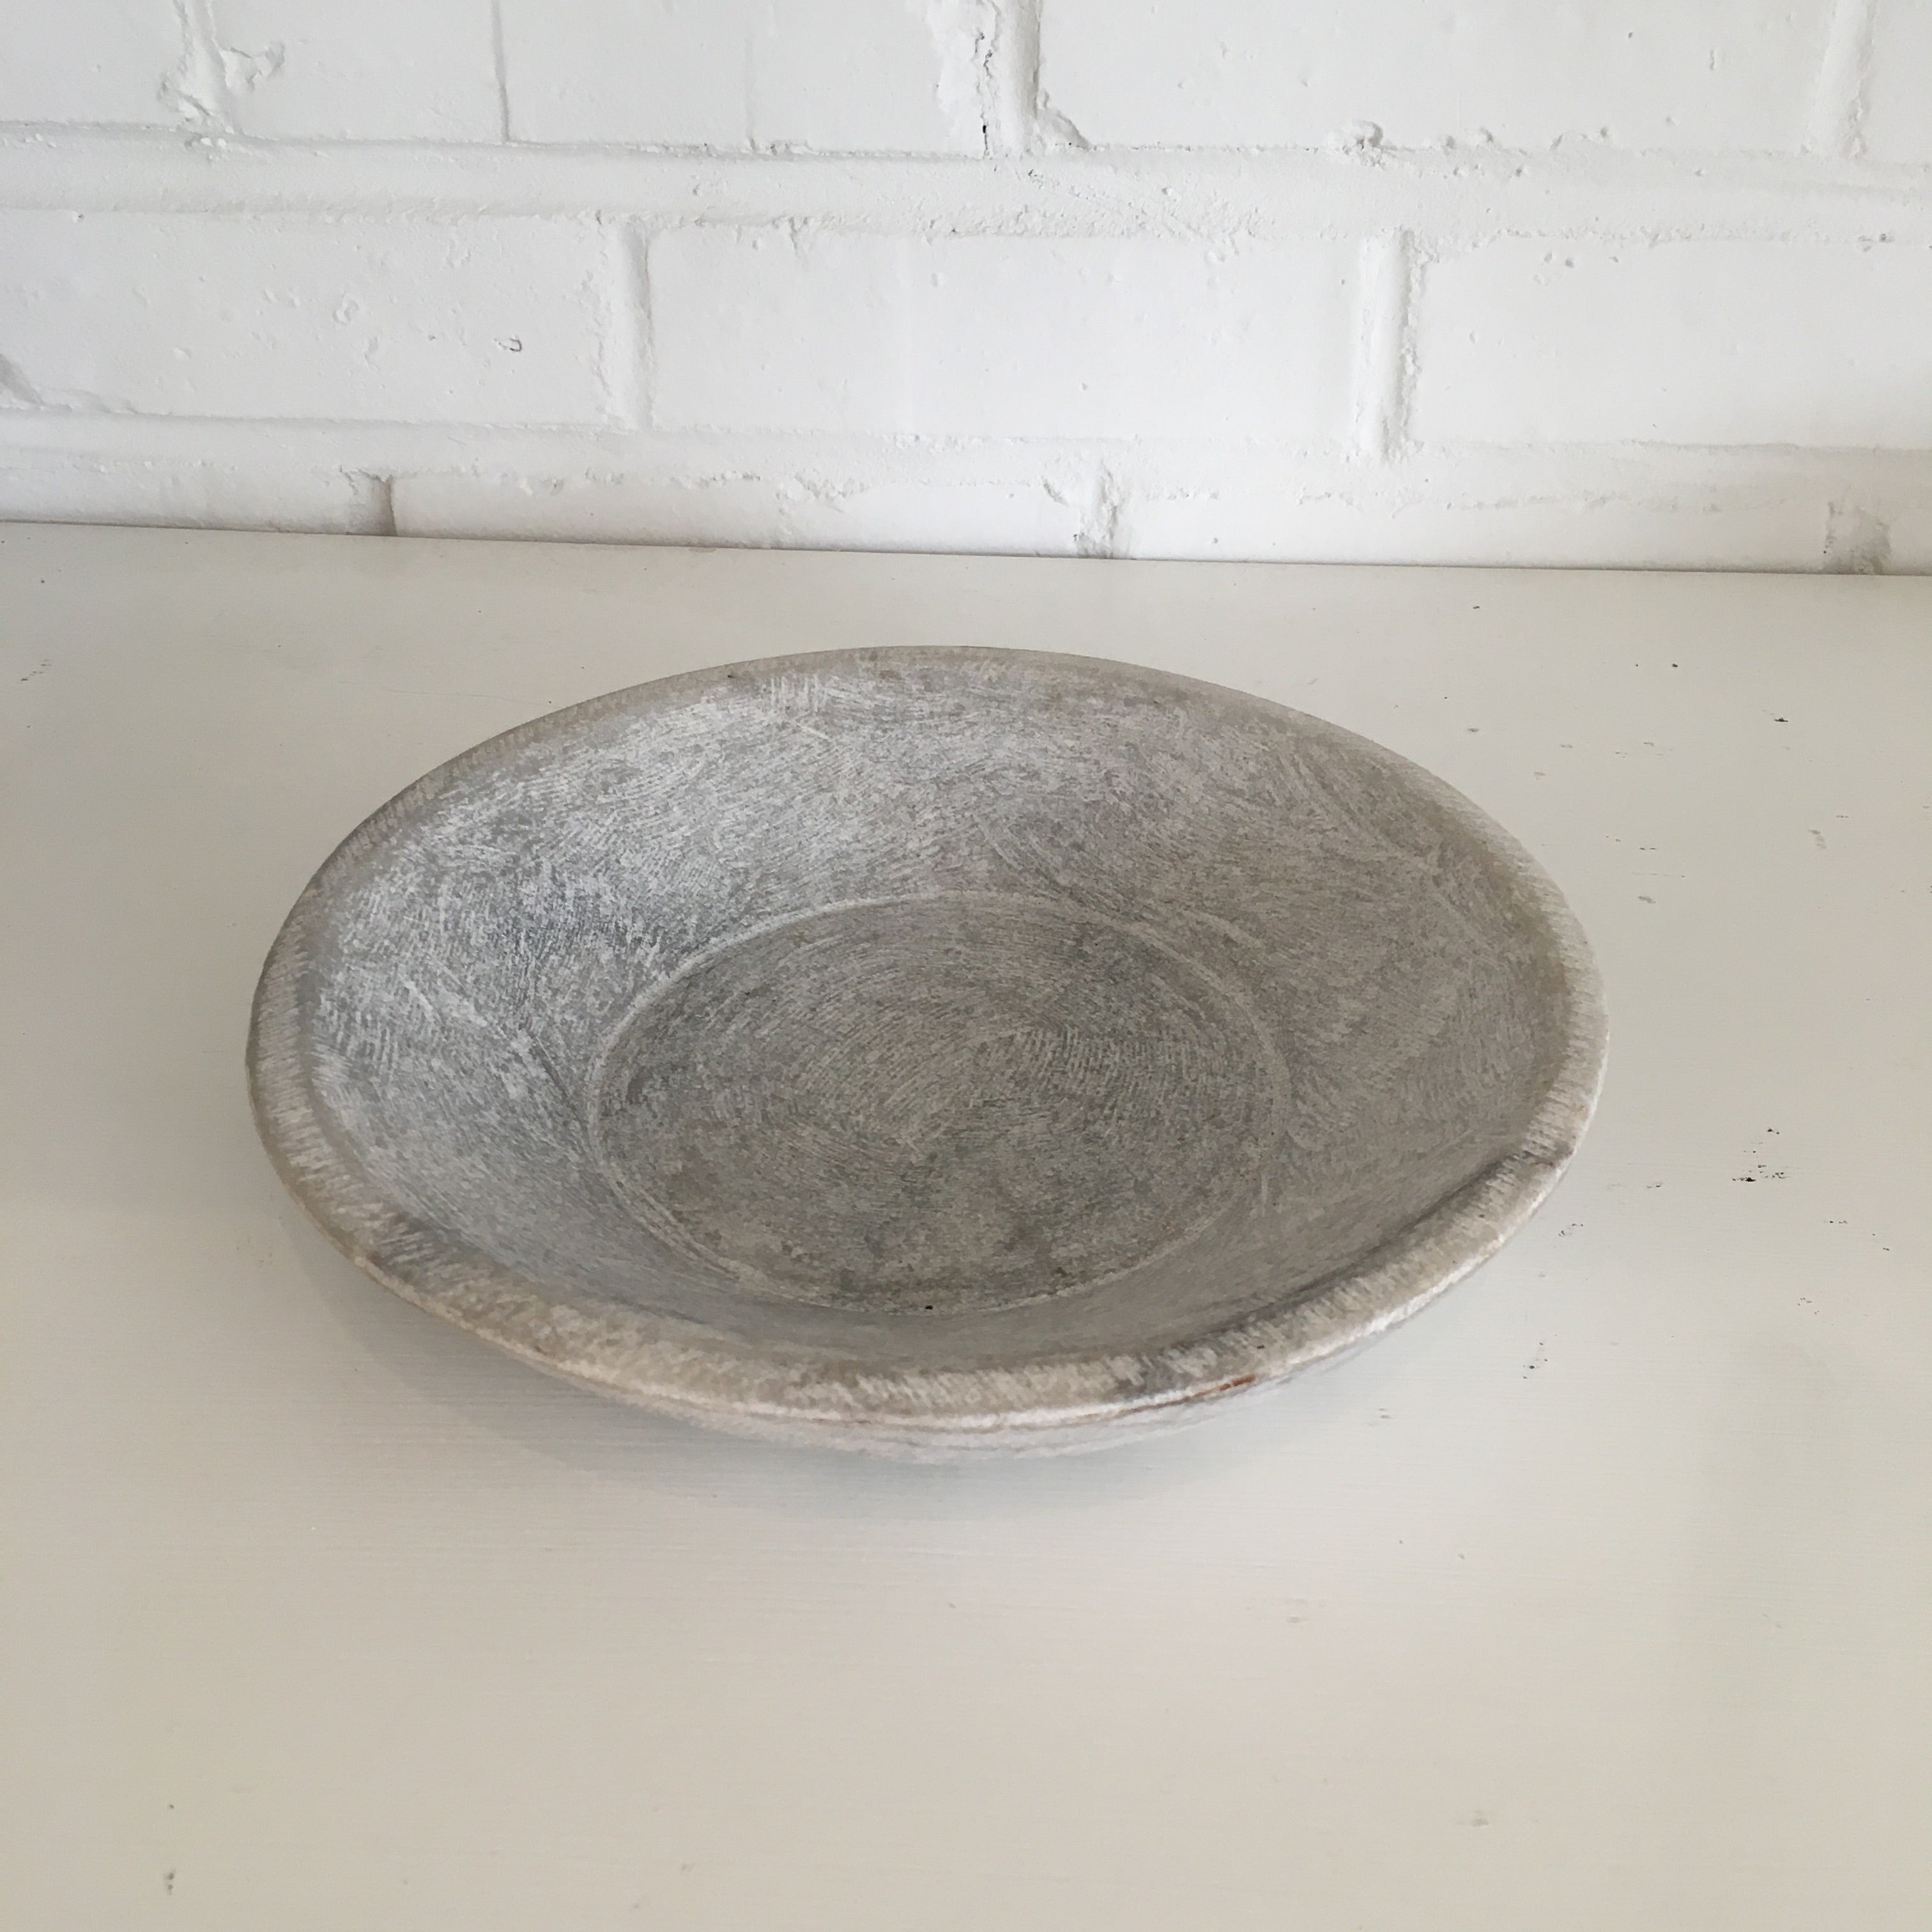 Vintage Stone Bowl